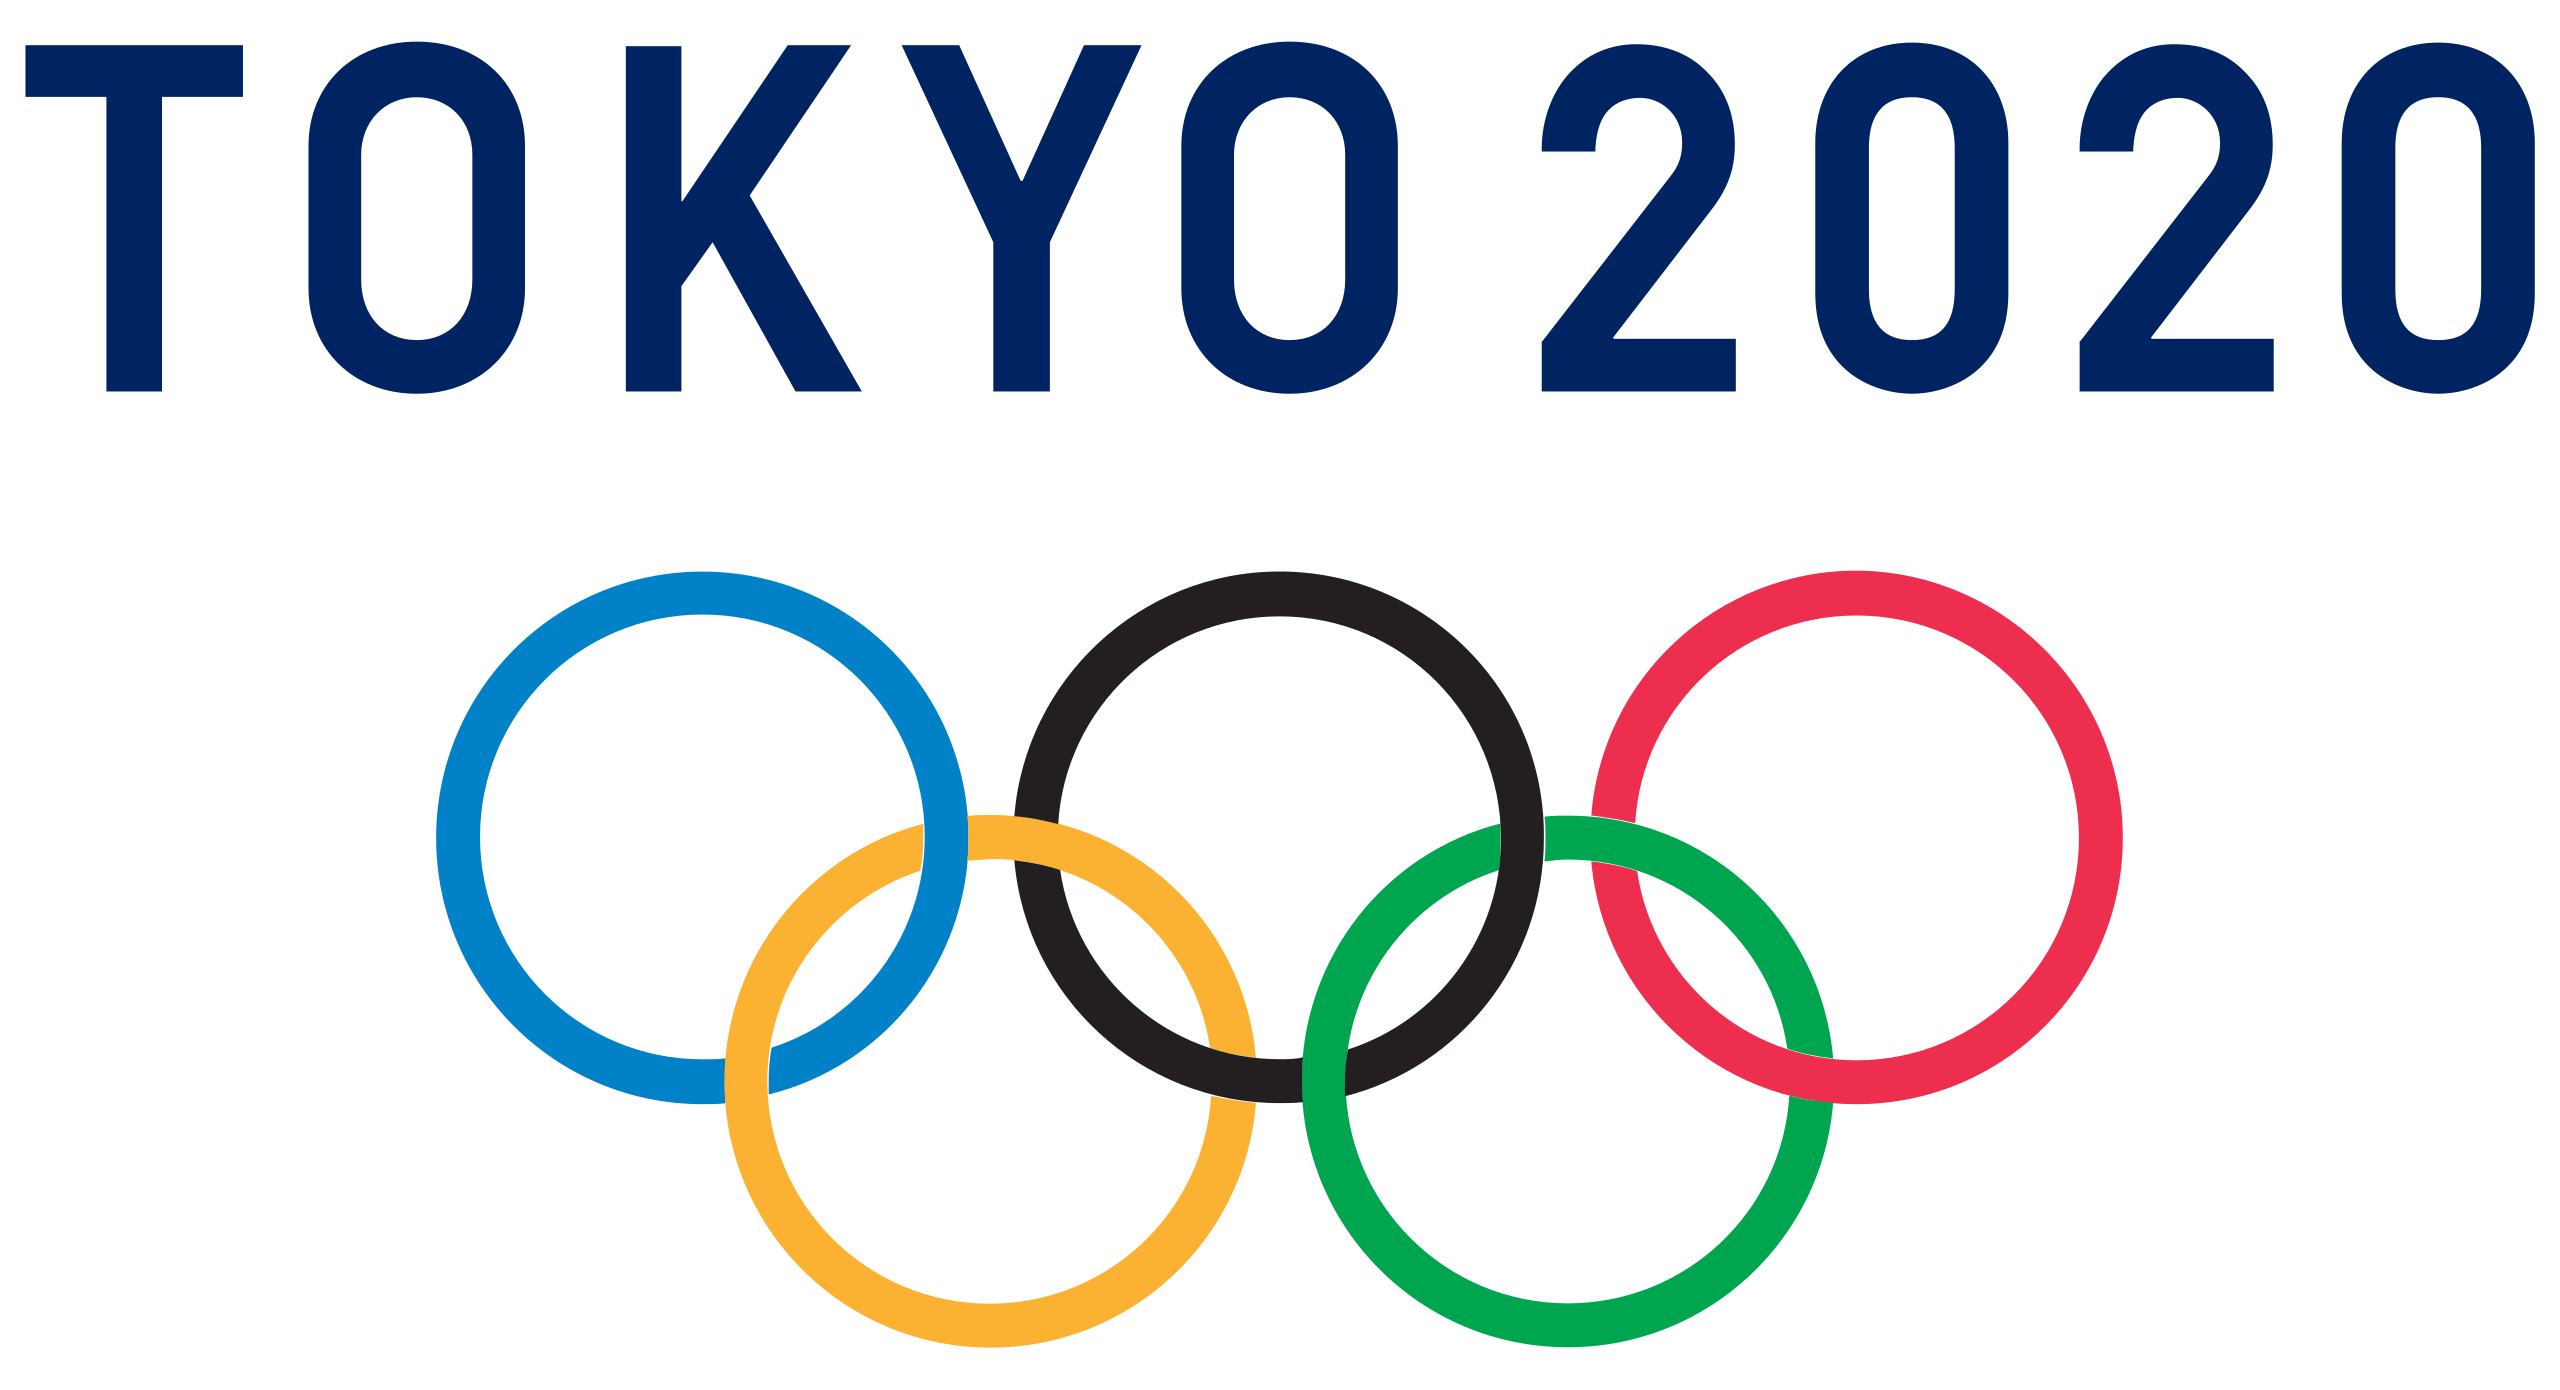 2020 Summer Olympics